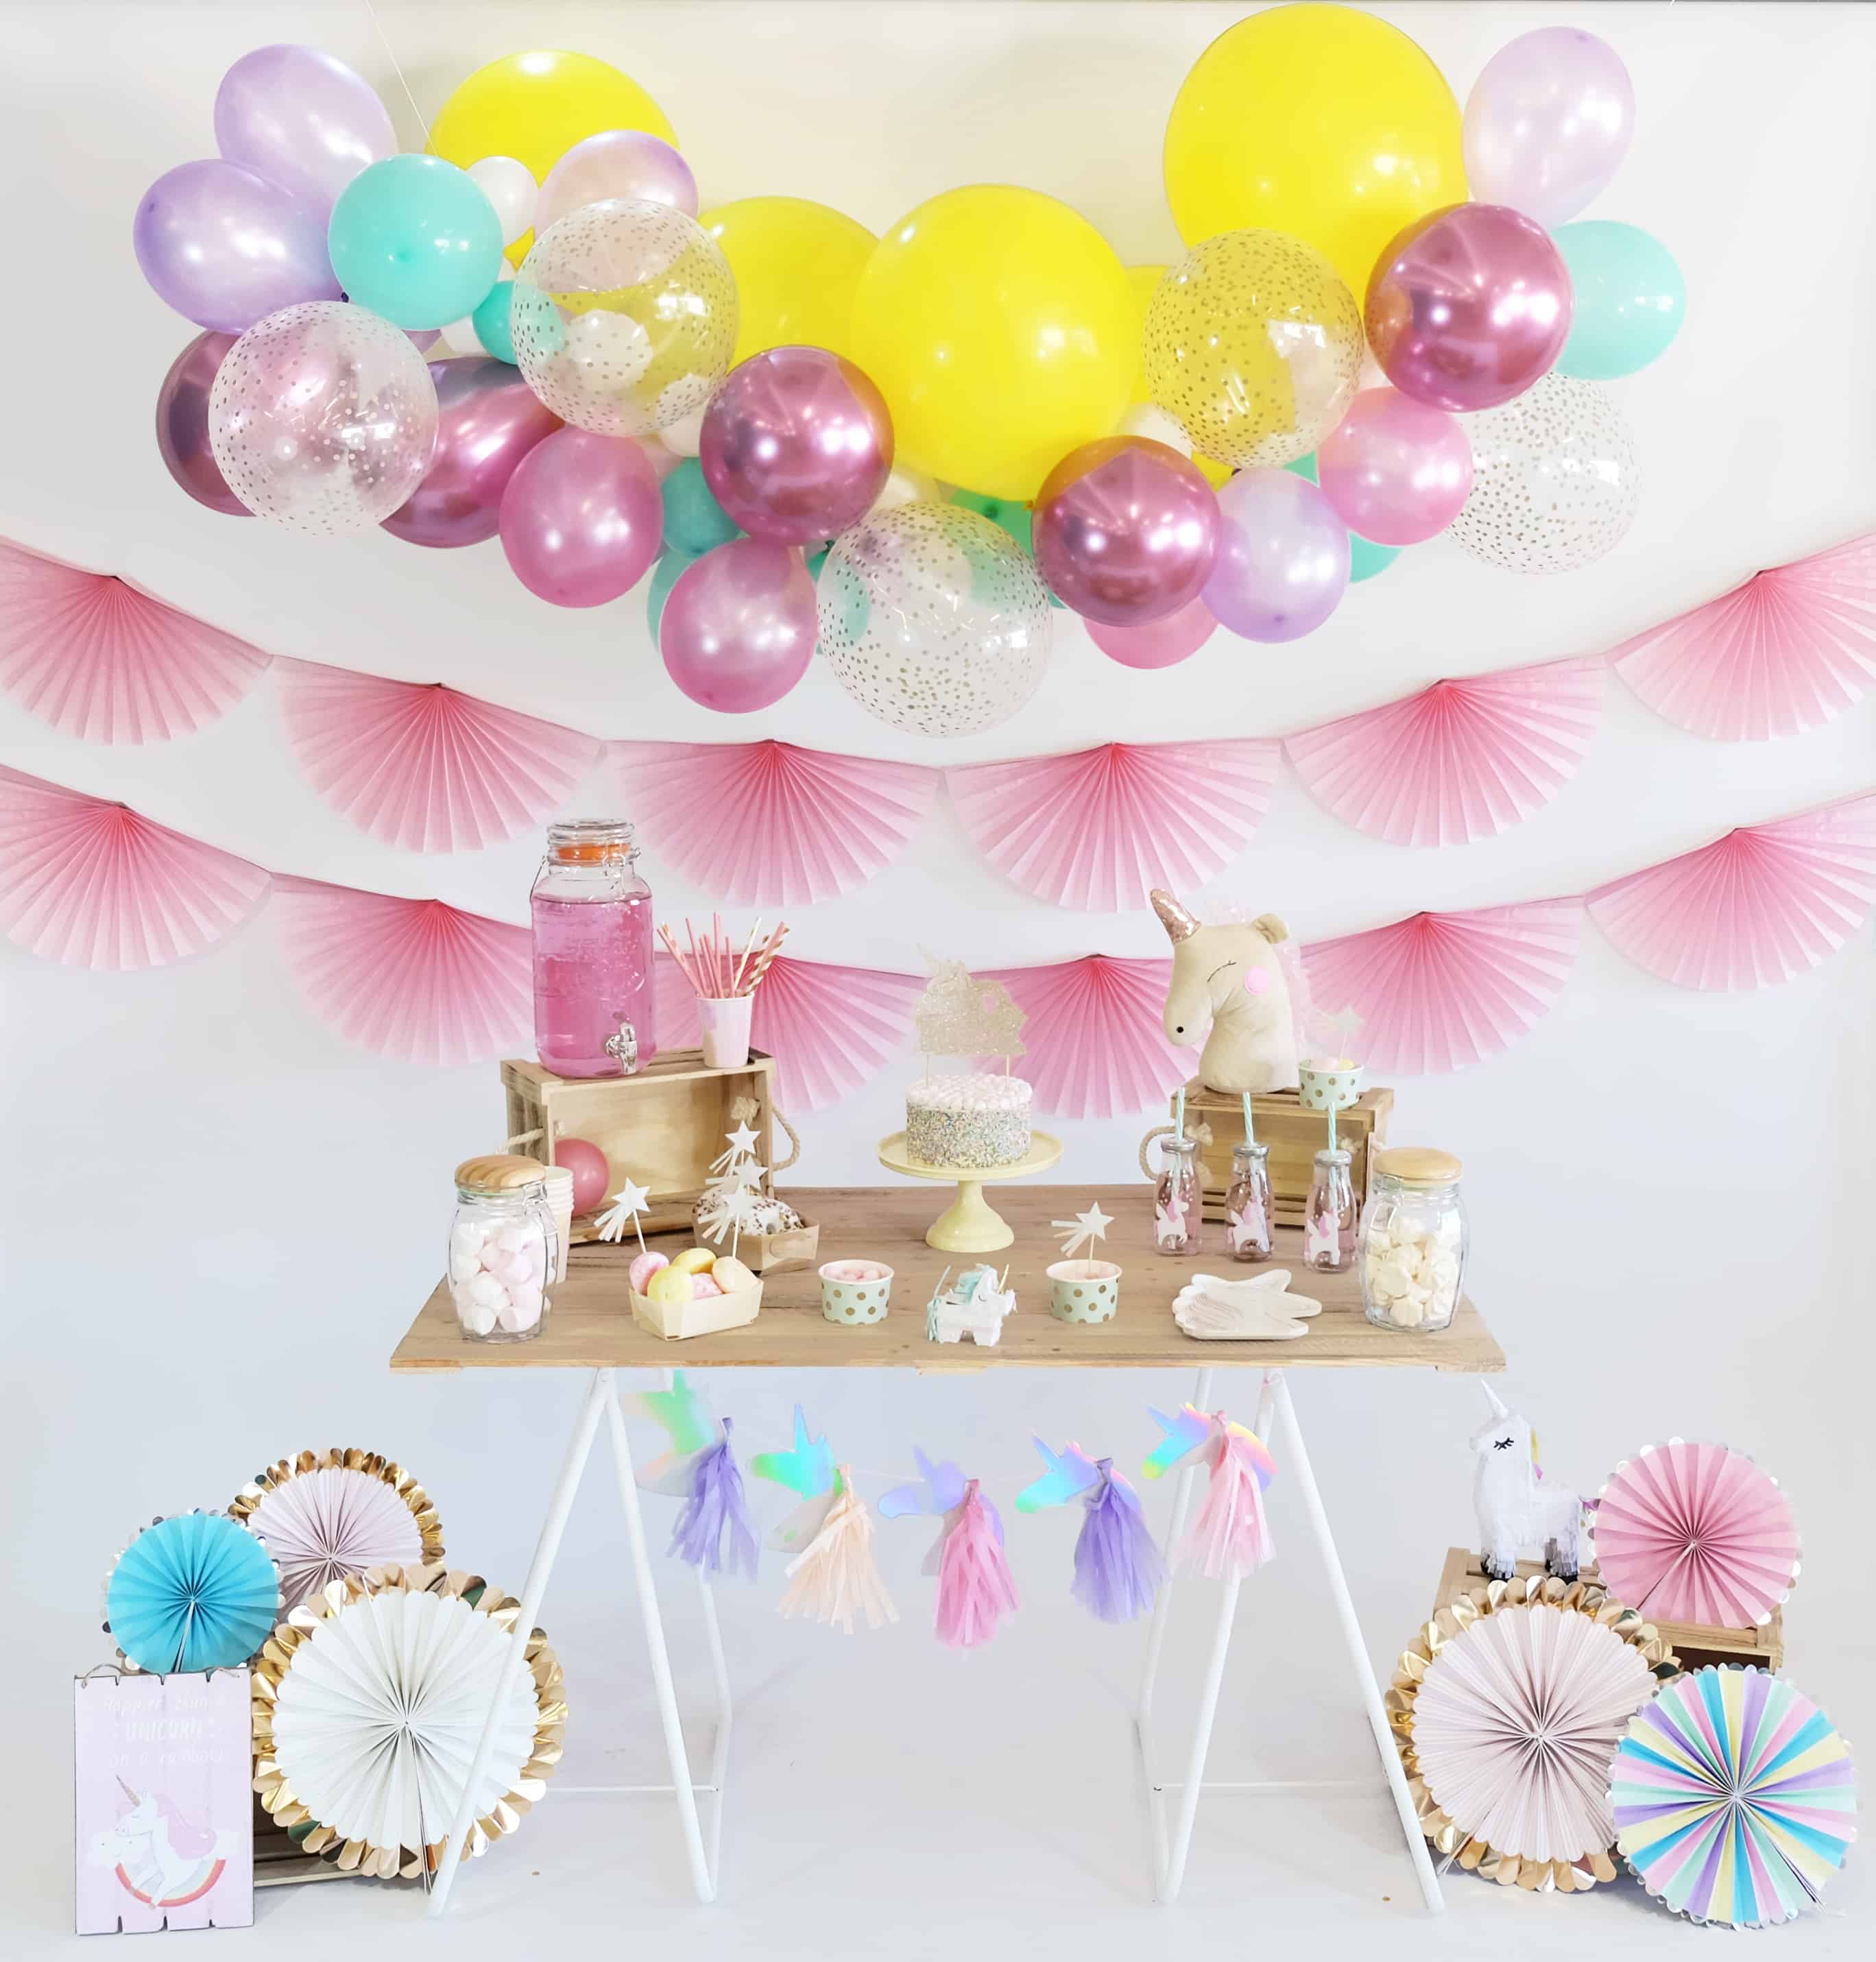 Choisir son kit anniversaire licorne - Blog Tendance Boutik